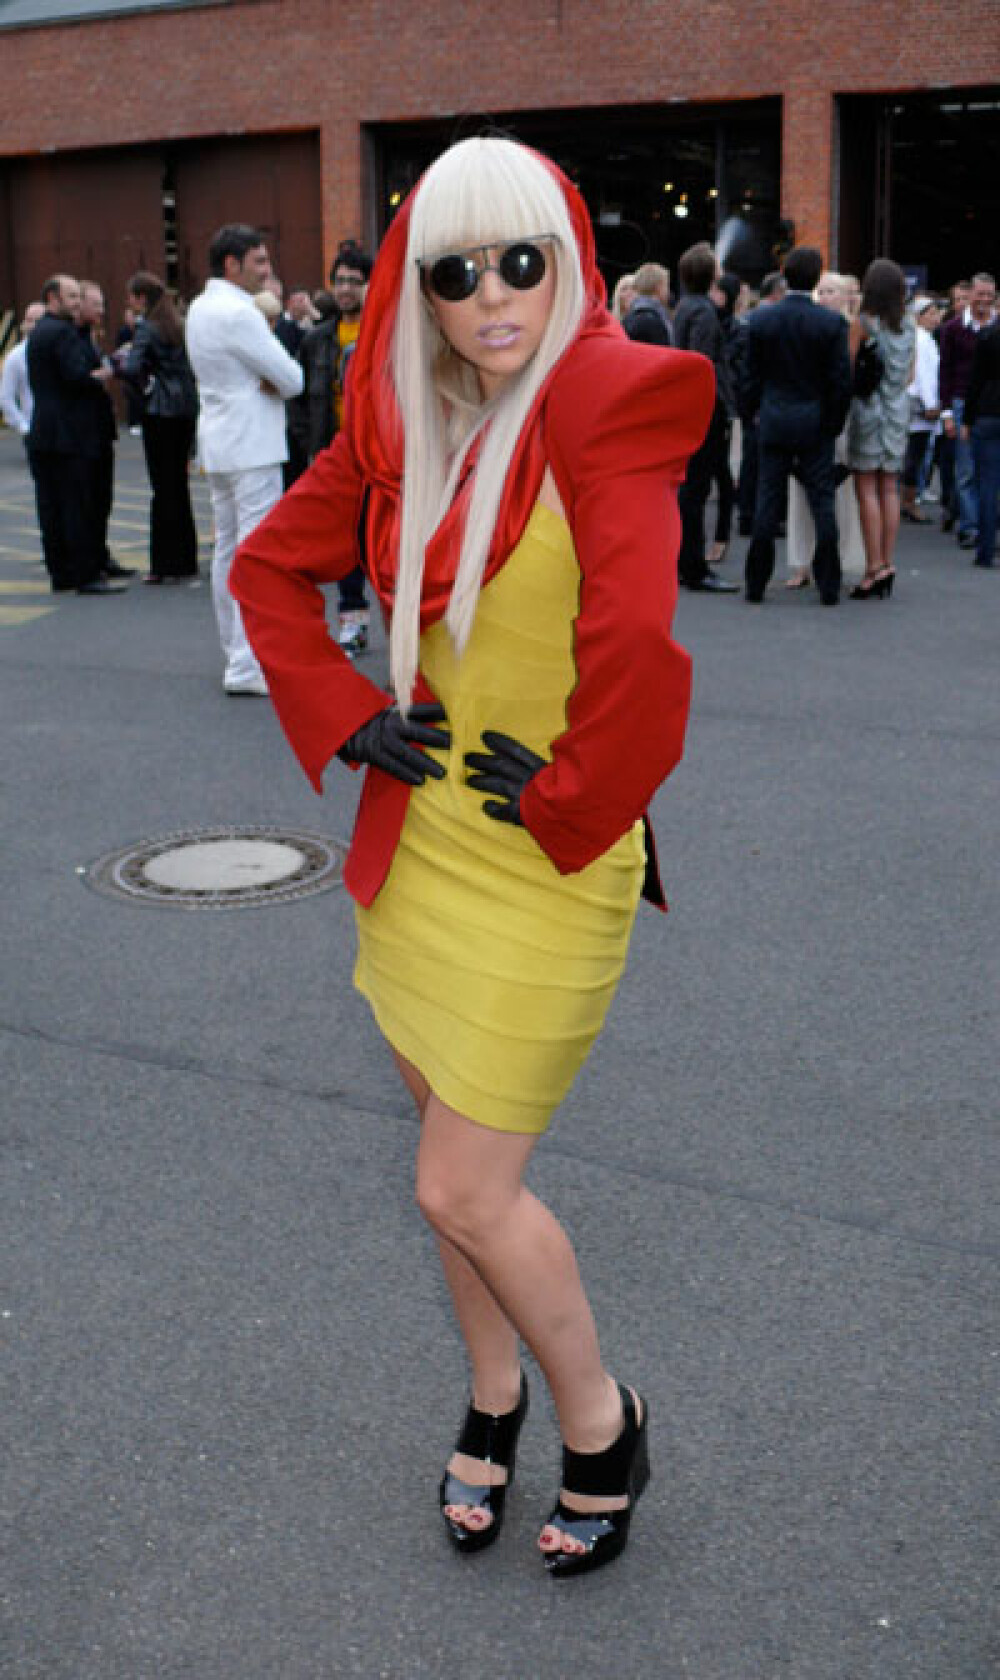 Avangardista sau vulgara? Lady Gaga: lectii despre moda 2009 - Imaginea 5